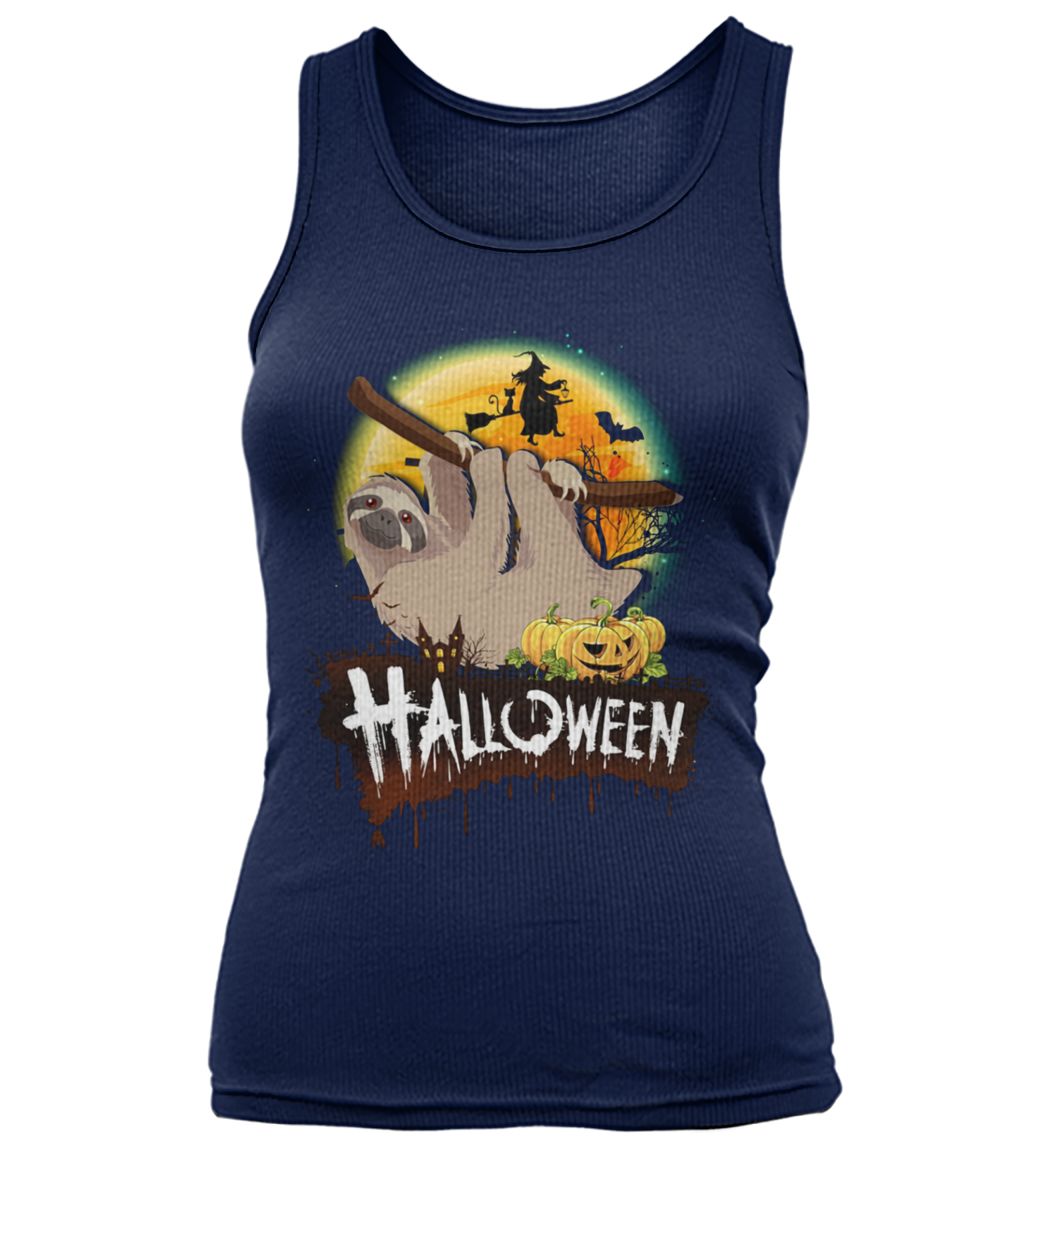 Sloth halloween women's tank top